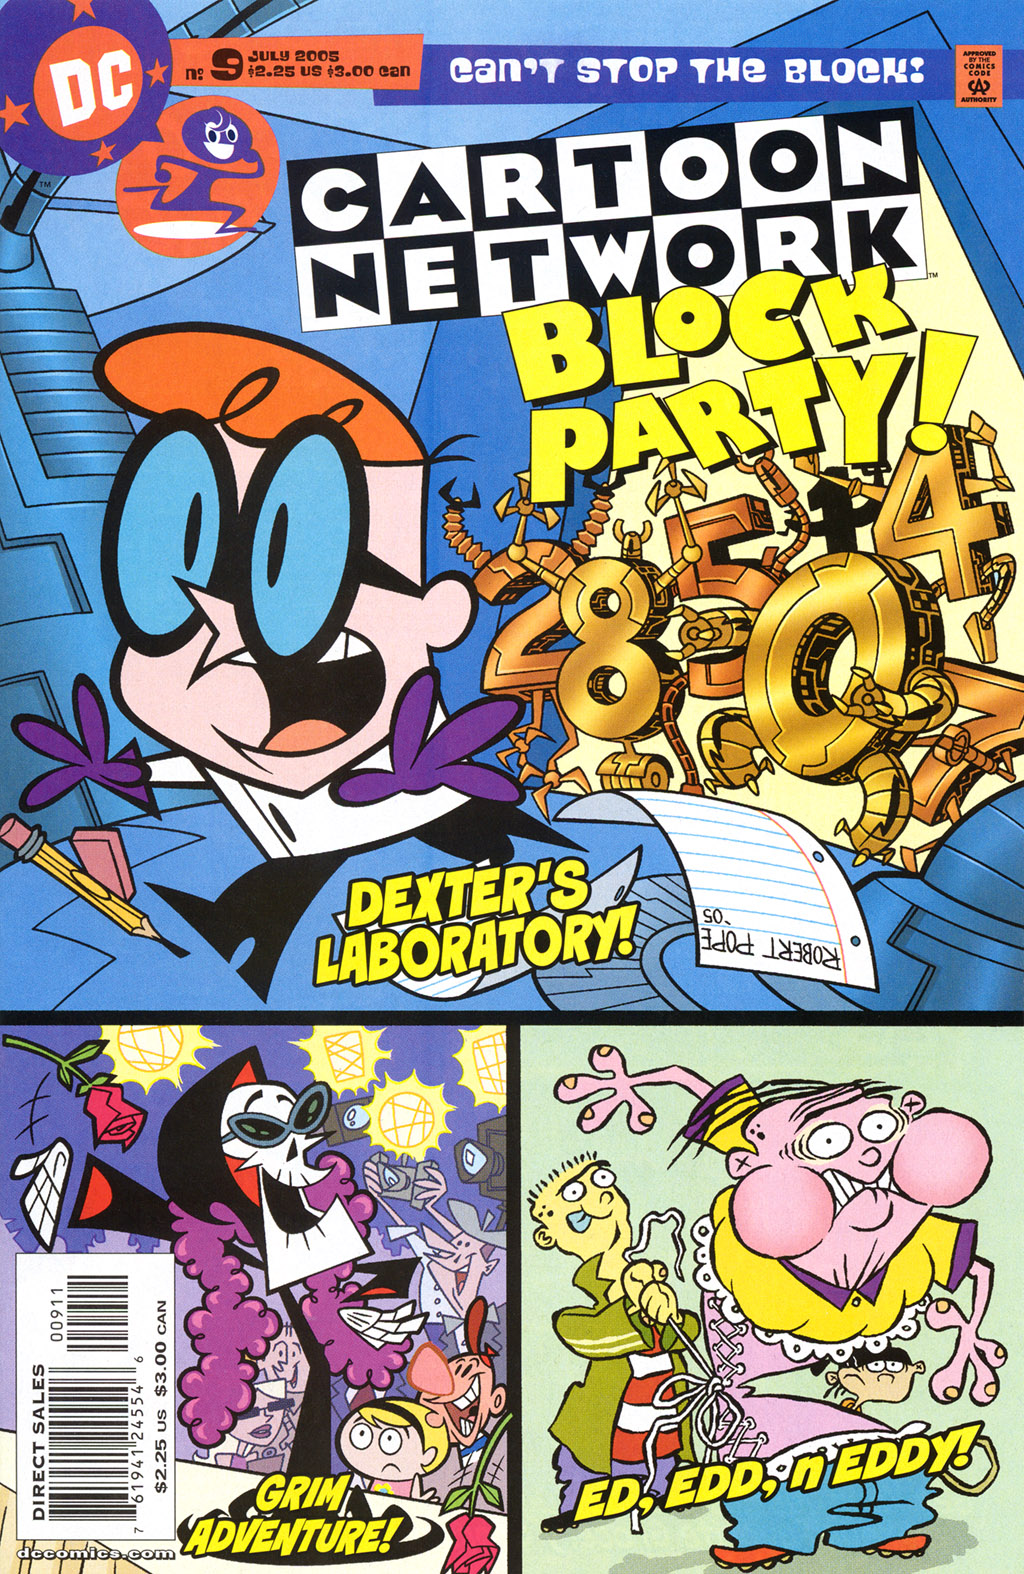 Cartoon Network Block Party Issue 9 | Read Cartoon Network Block Party  Issue 9 comic online in high quality. Read Full Comic online for free -  Read comics online in high quality .|